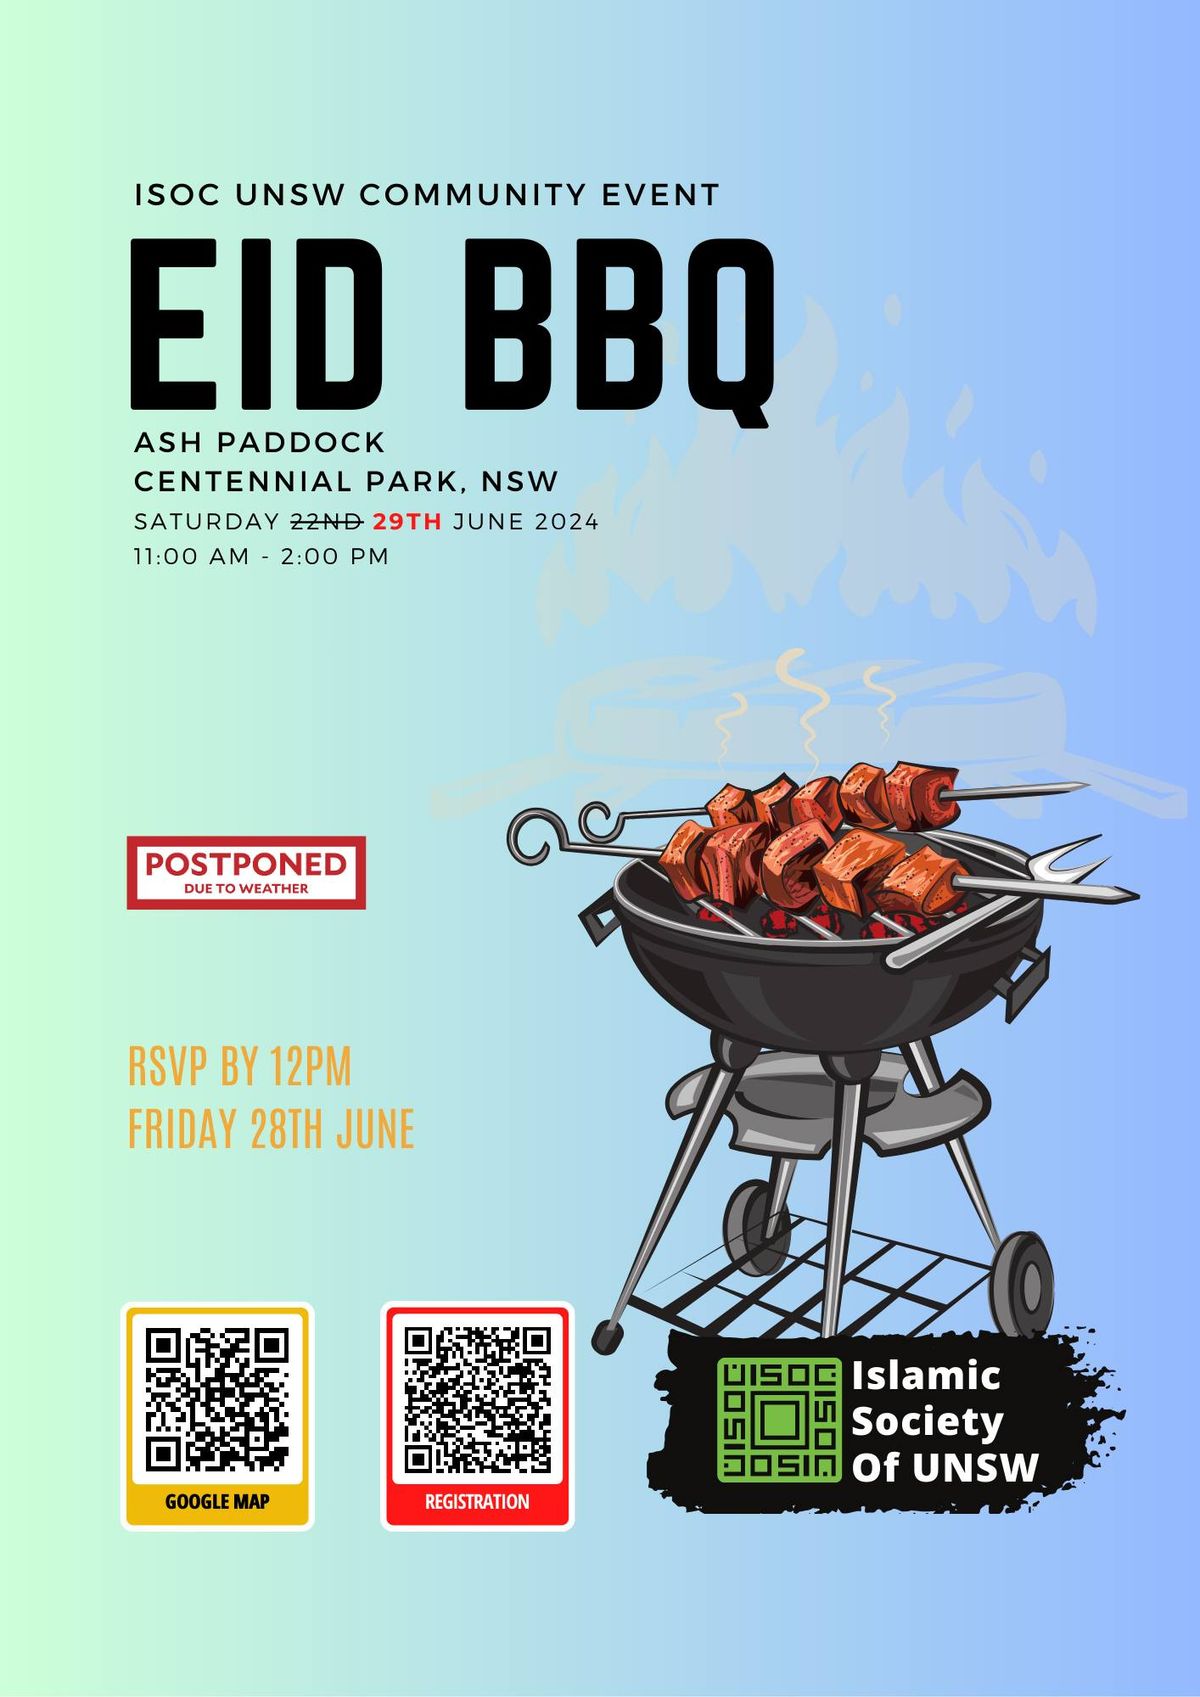 Eid BBQ - ISOC UNSW Community Event